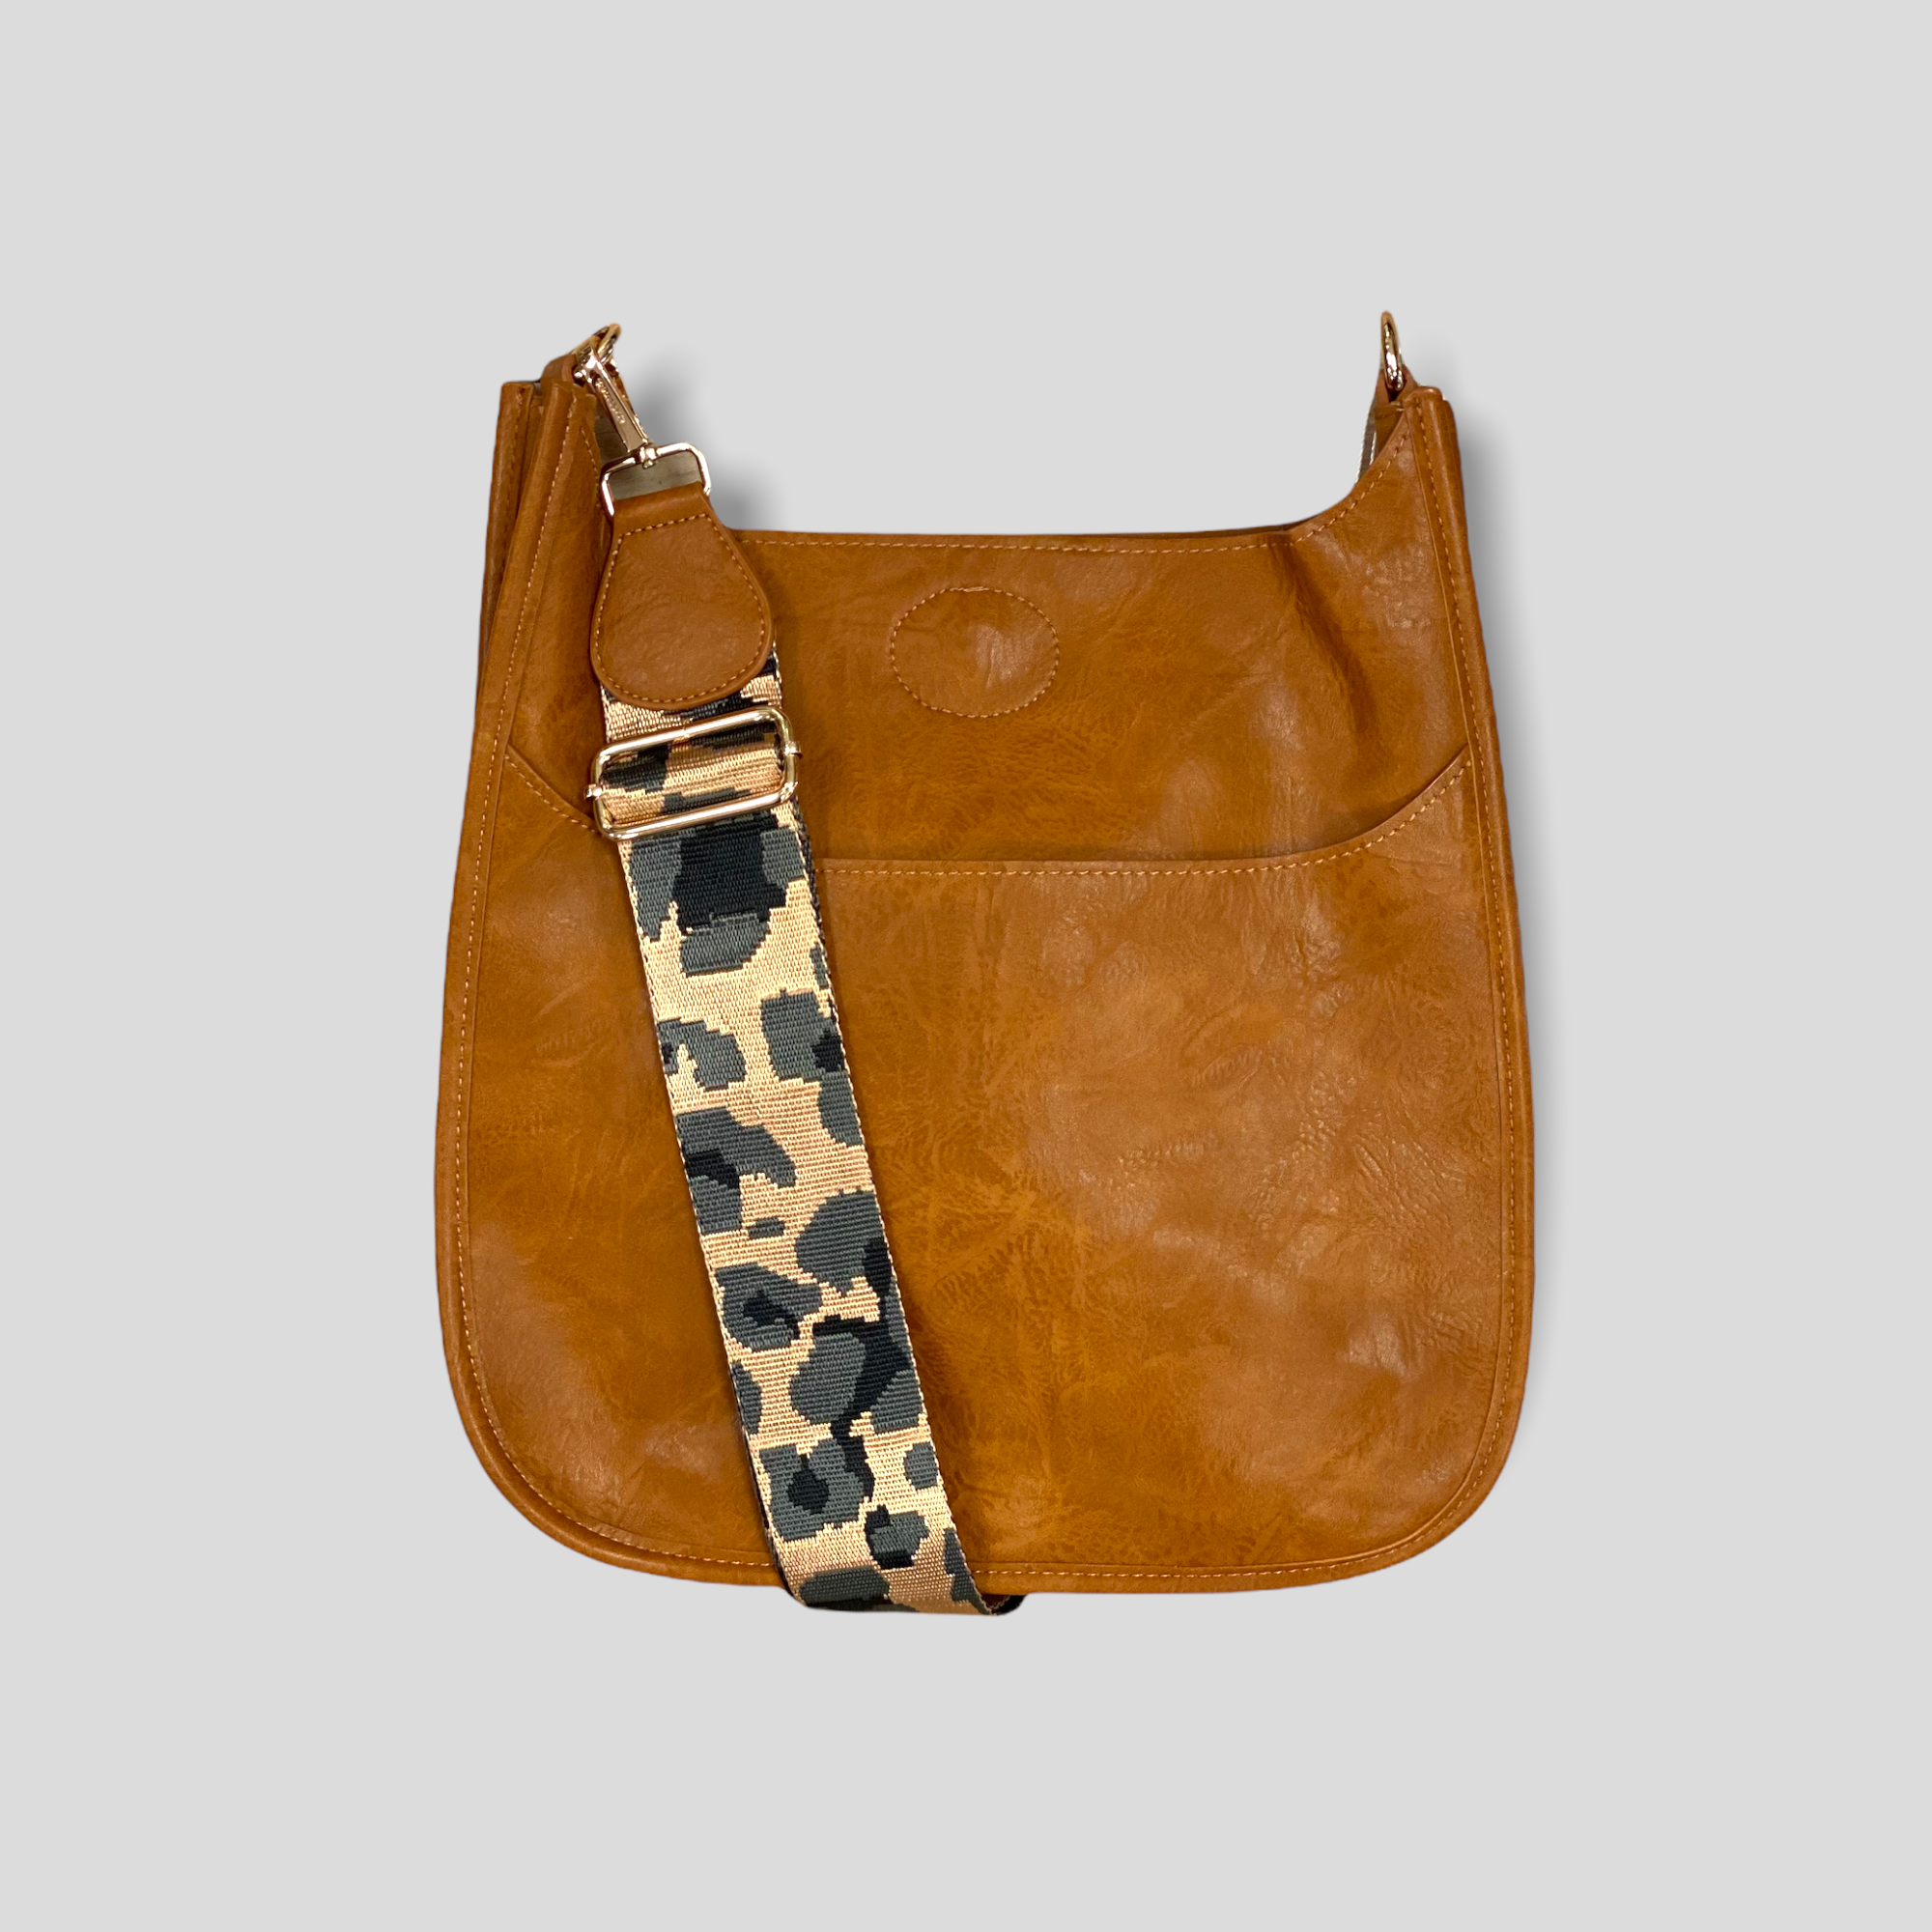 Leopard Print Interchangeable Bag Strap | Sugarplum Boutique Grey